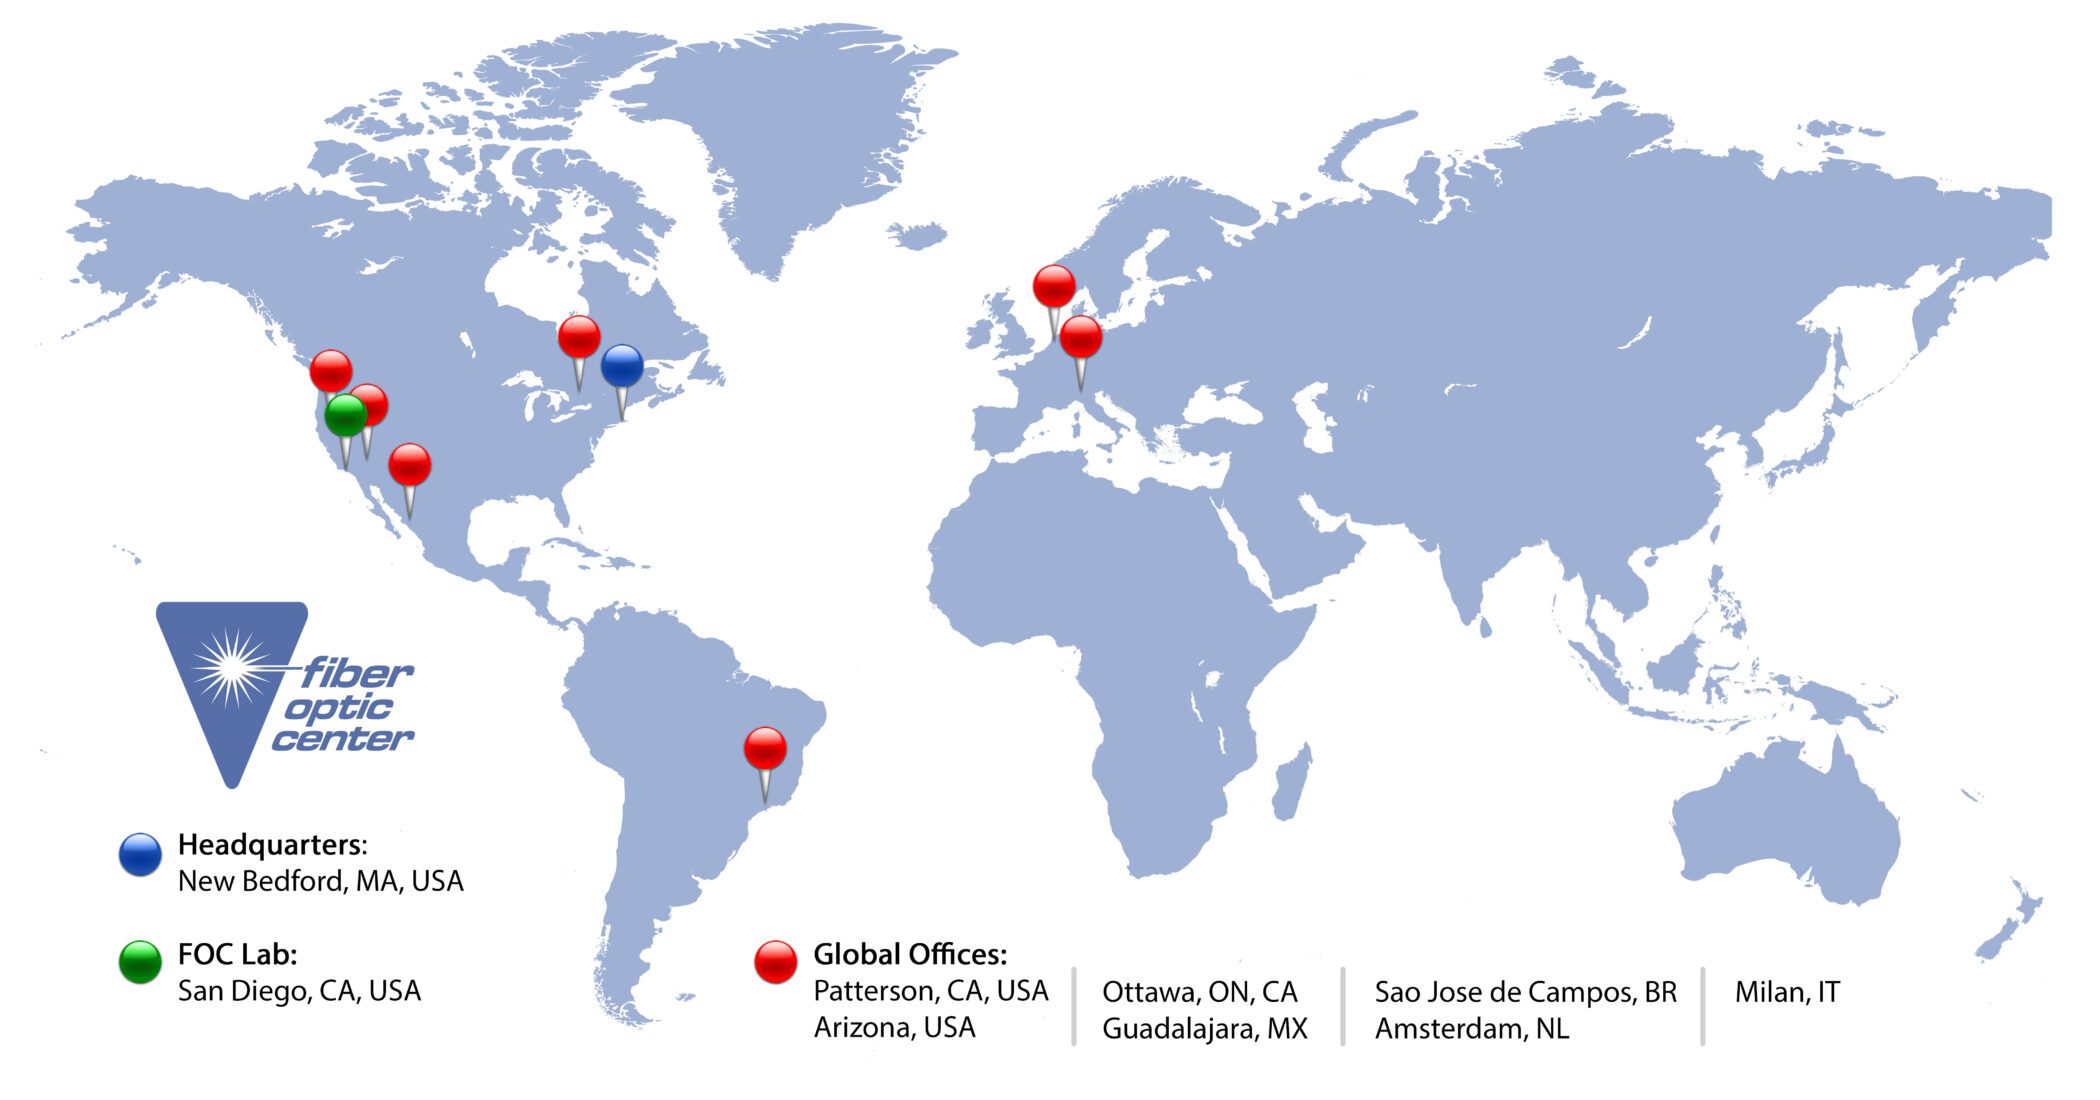 Map of Fiber Optic Center Office Locations